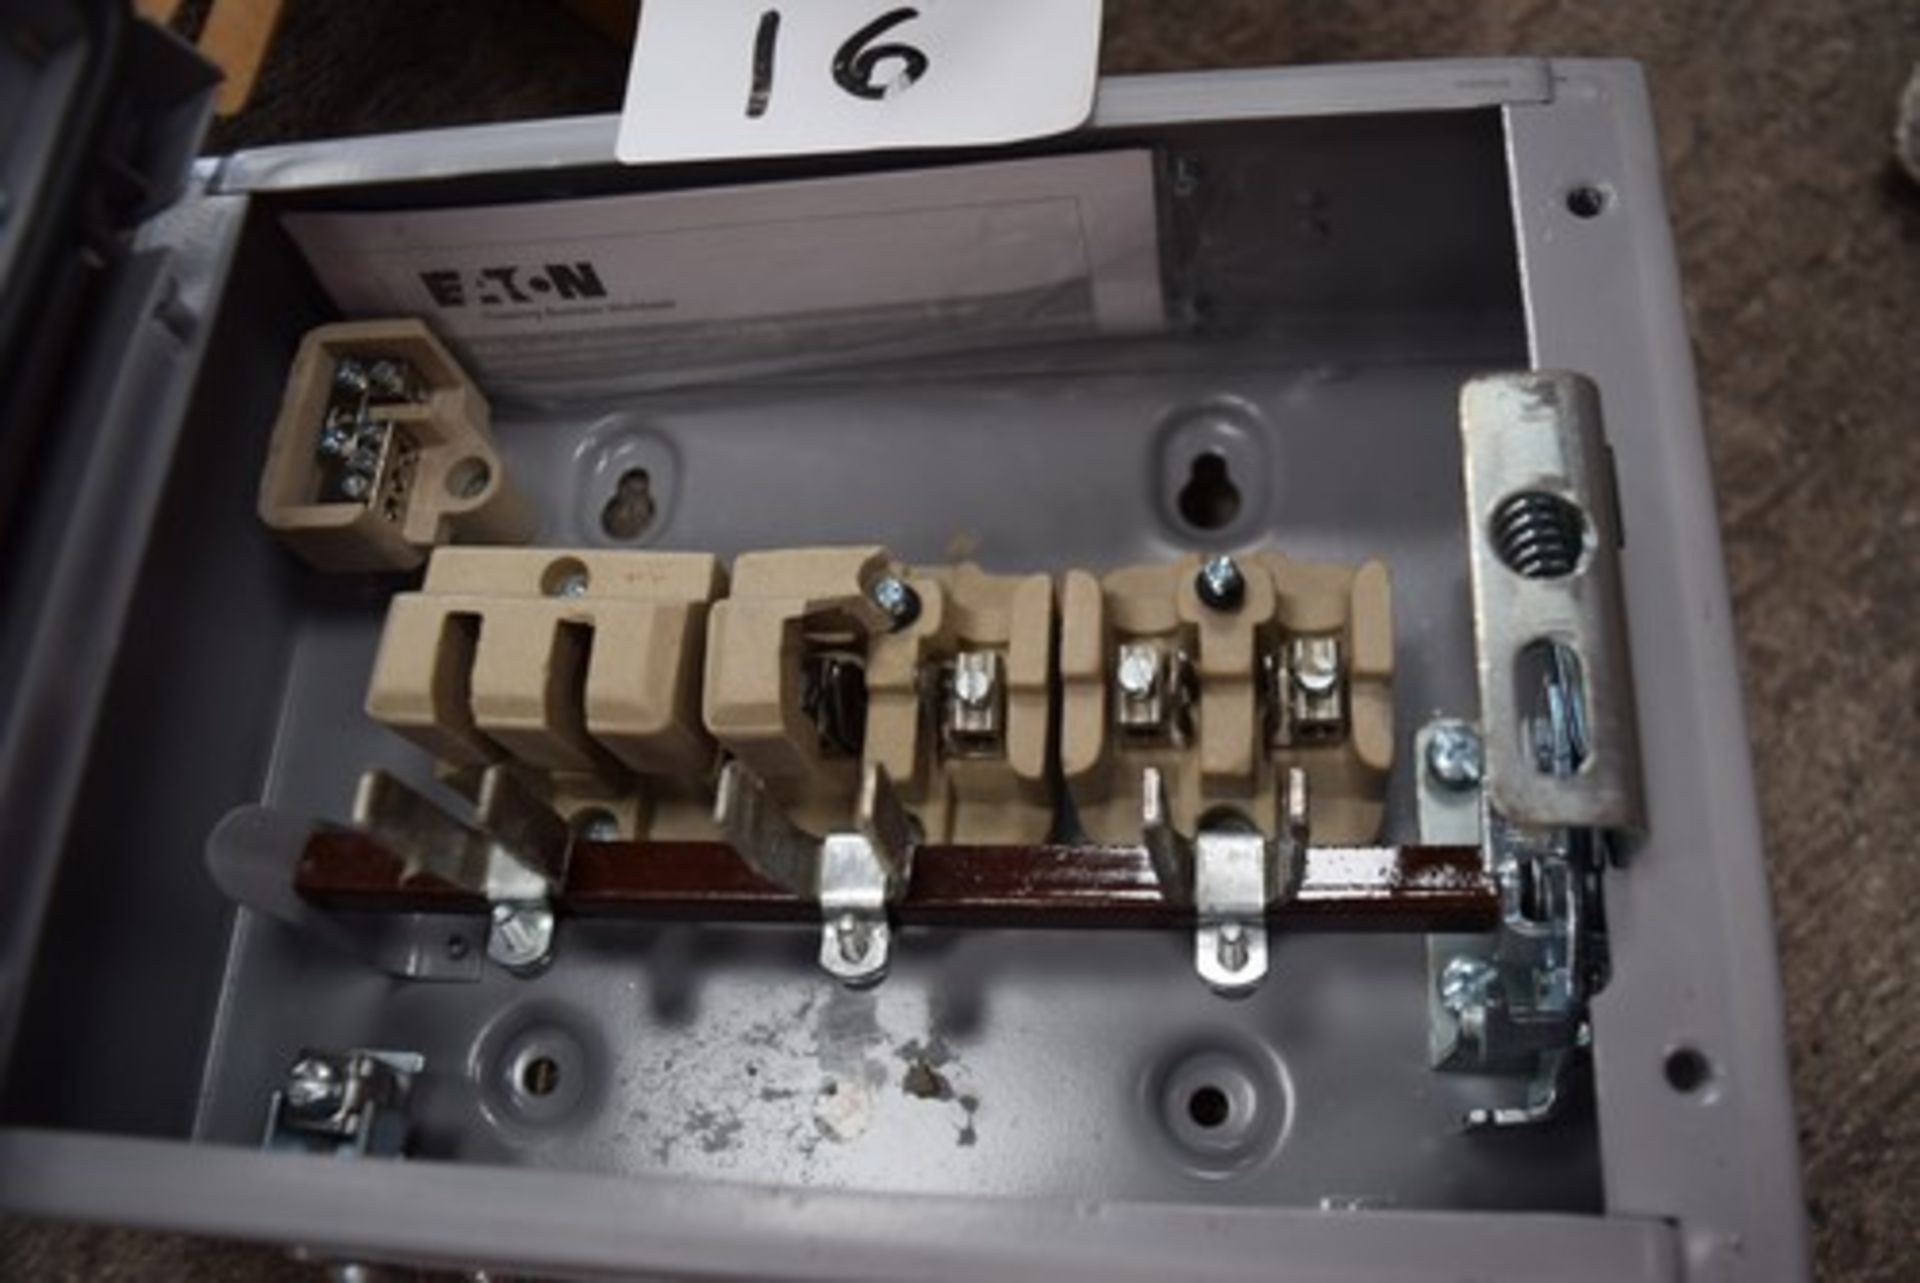 2 x Eaton Exel switch disconnectors, item no: 30AXTN2, Note: some ceramic insulators are broken - - Image 6 of 12